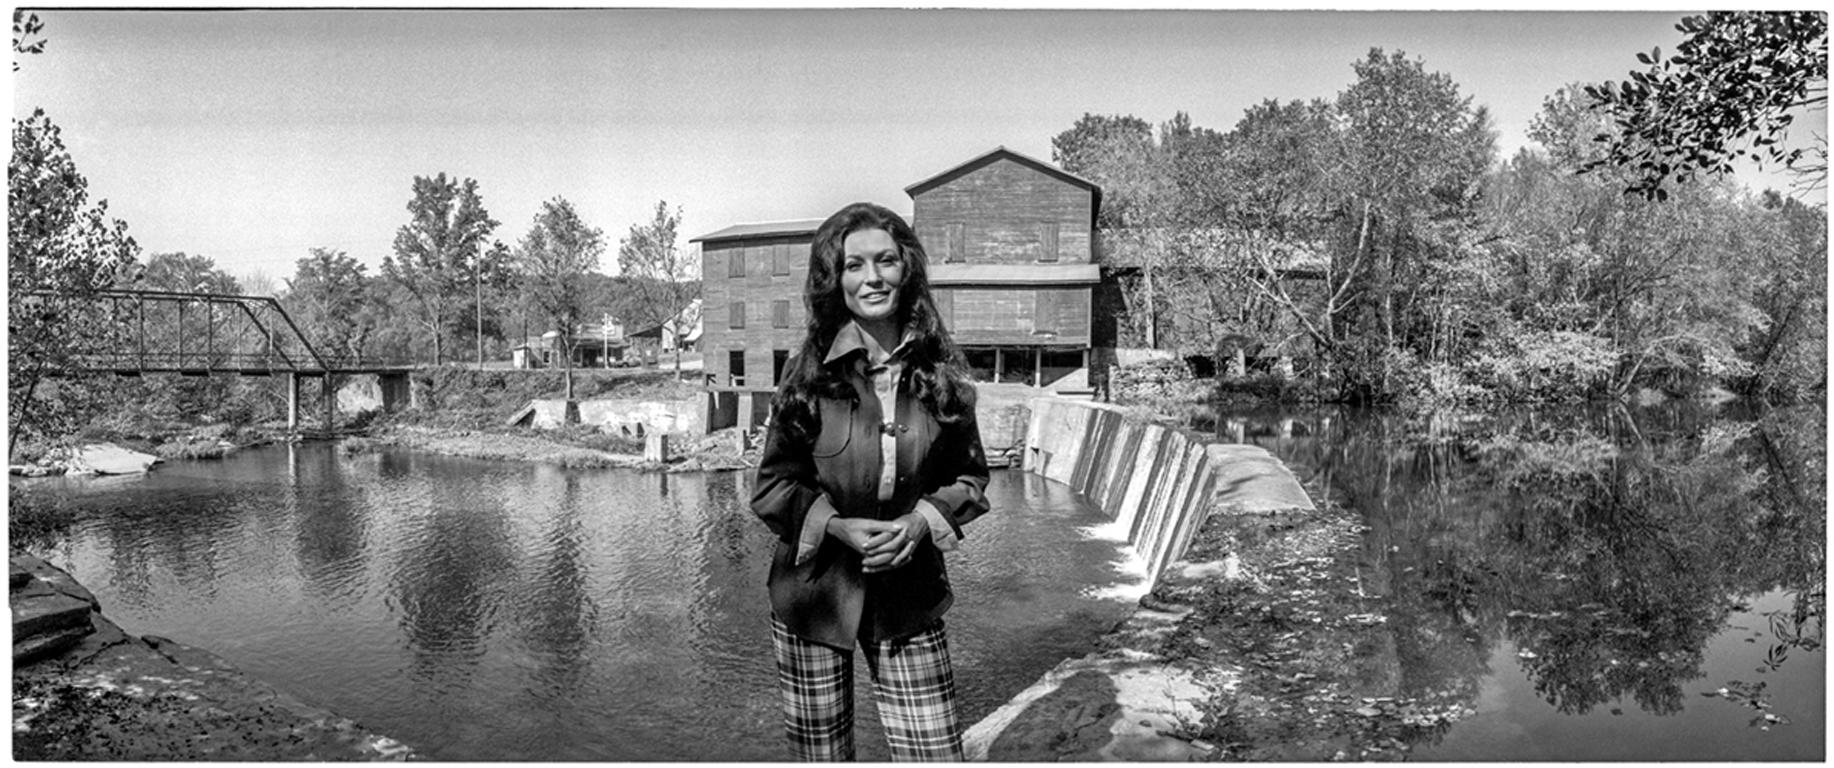 Loretta Lynn in her small town of Hurricane Mills, Tennessee